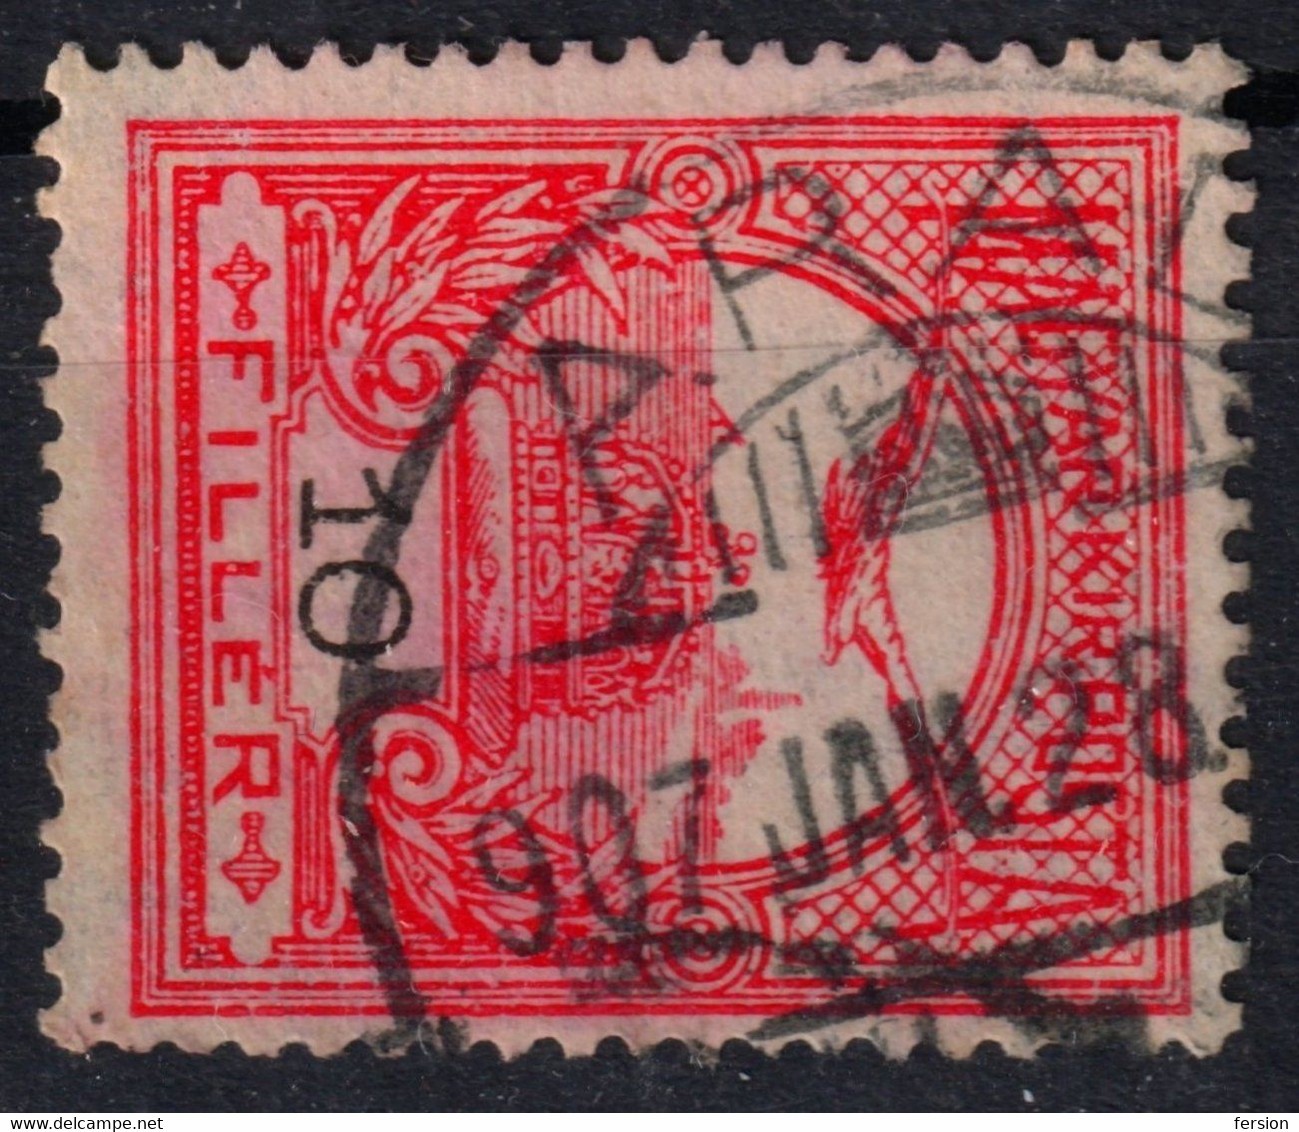 ARAD Postmark / TURUL Crown 1907 Hungary Romania Transylvania Banat ARAD County KuK - 10 Fill - Transylvania